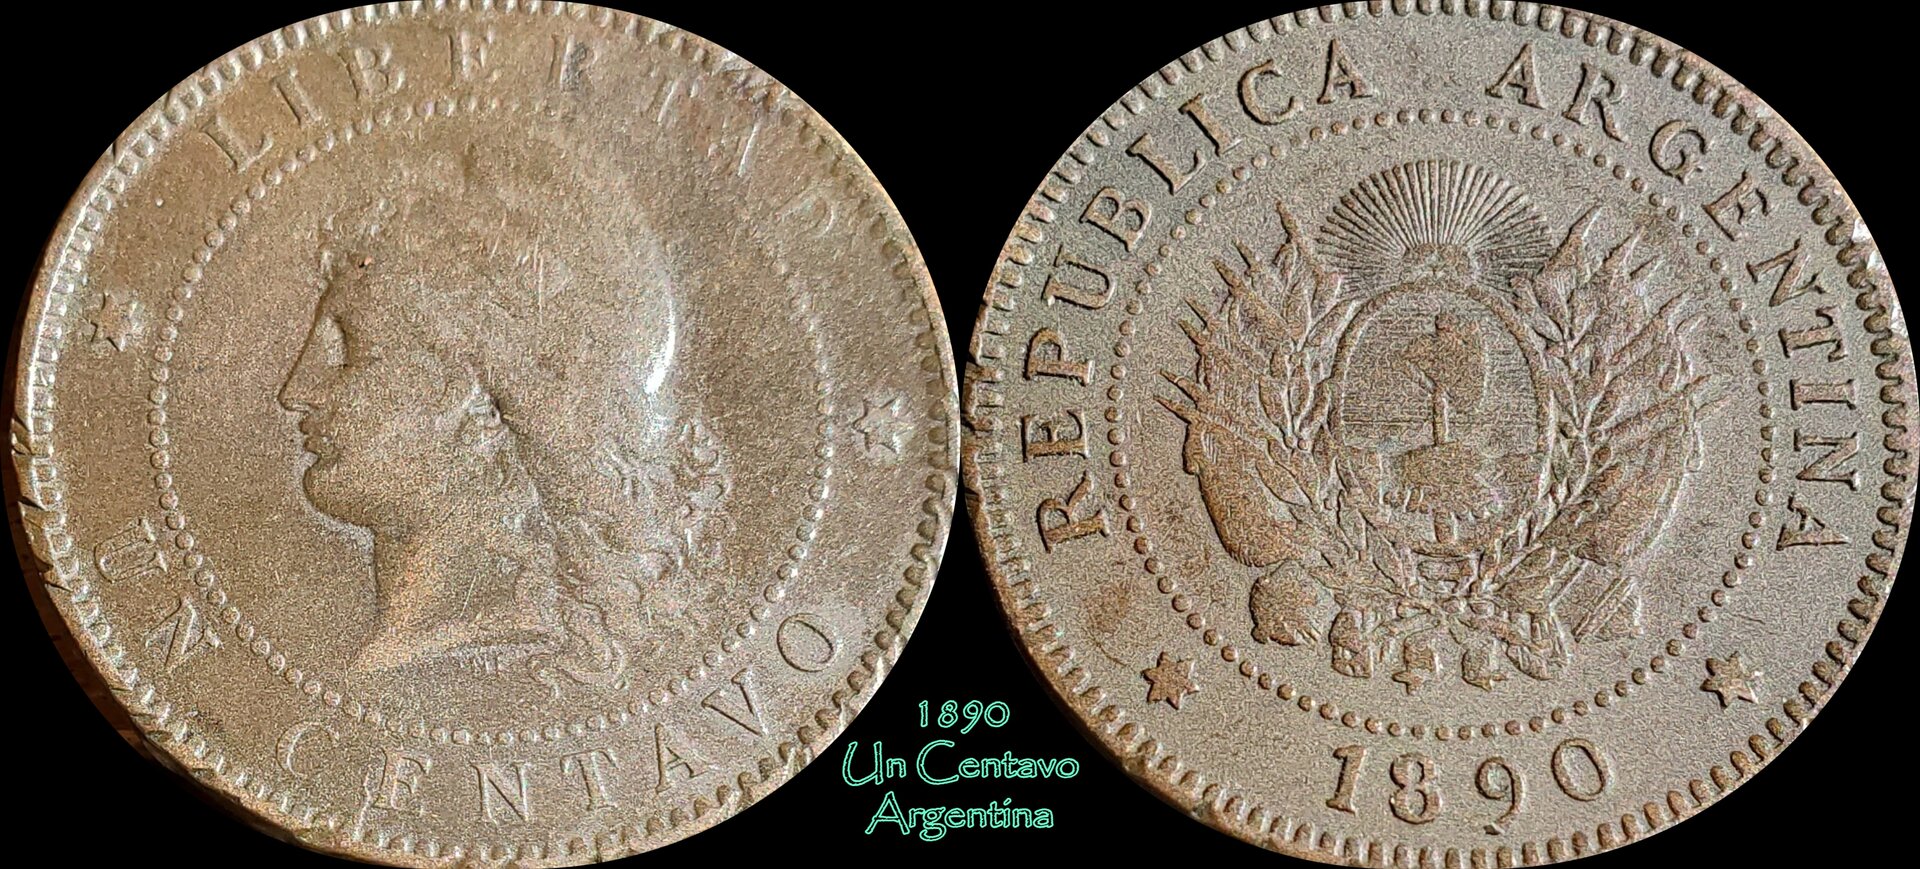 1890 Argentina.jpg